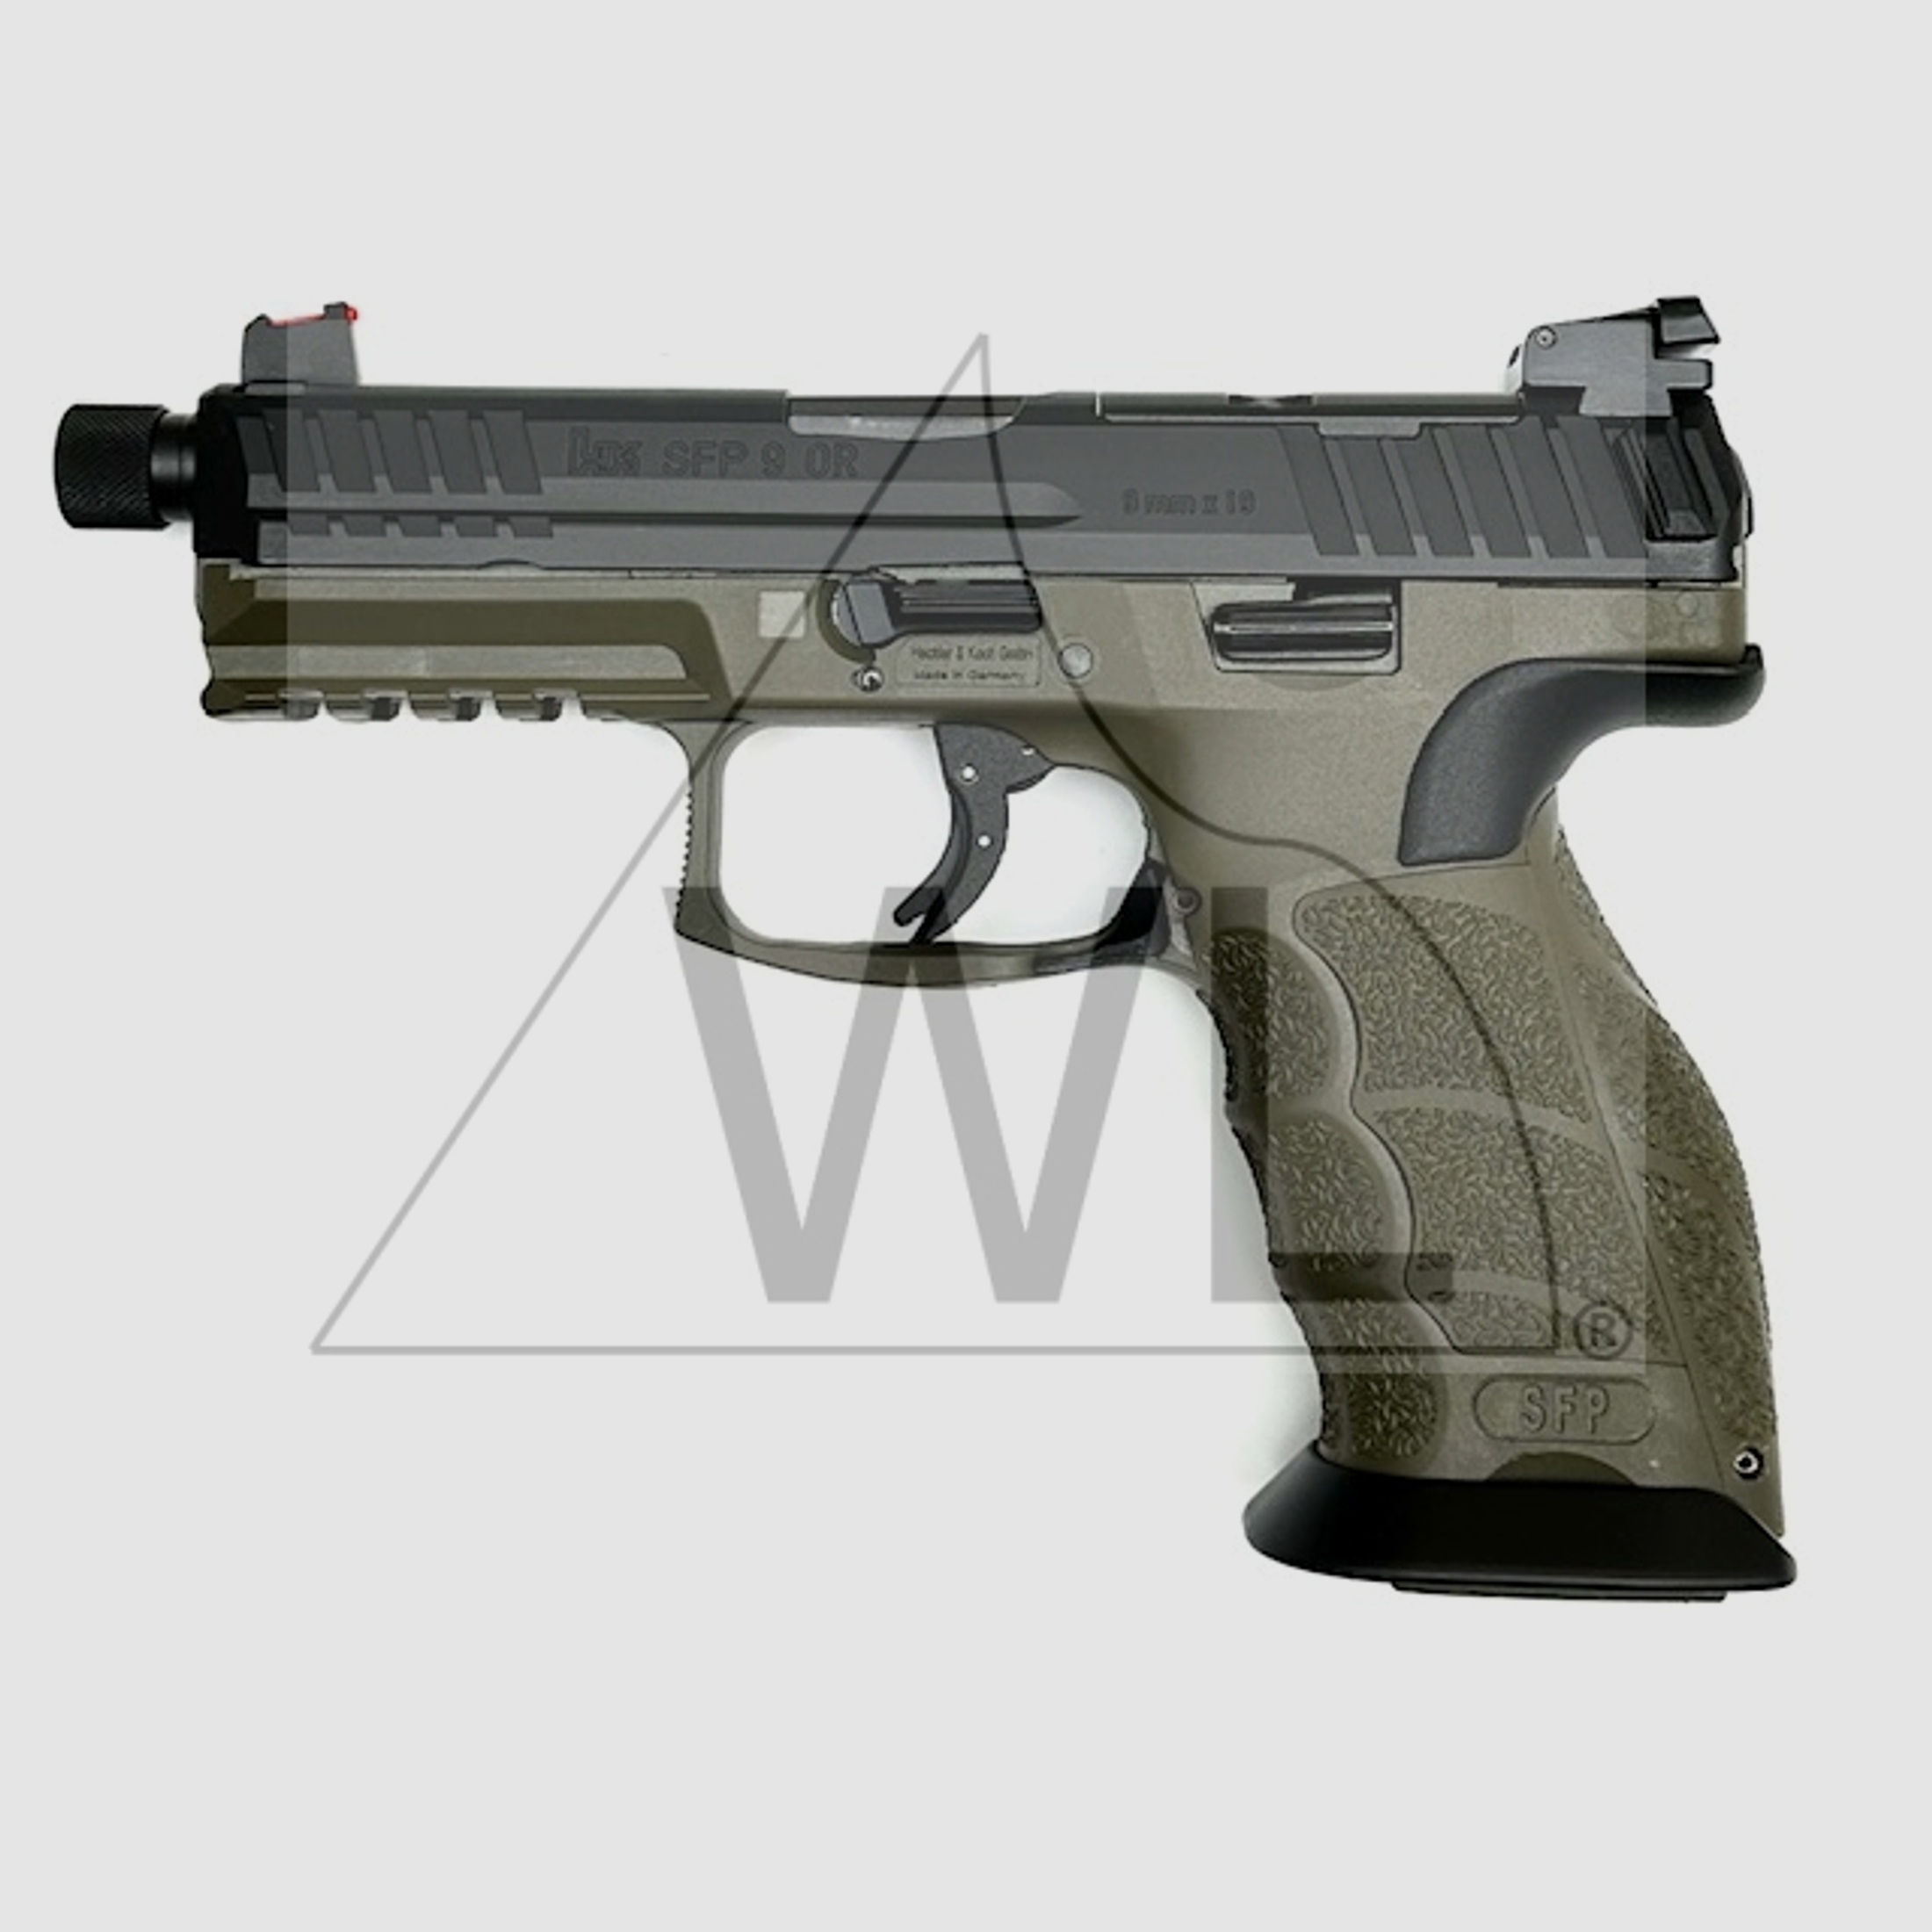 Heckler & Koch SFP9-SD Optical Ready natogrün, 9mm Luger, Abzug getunt